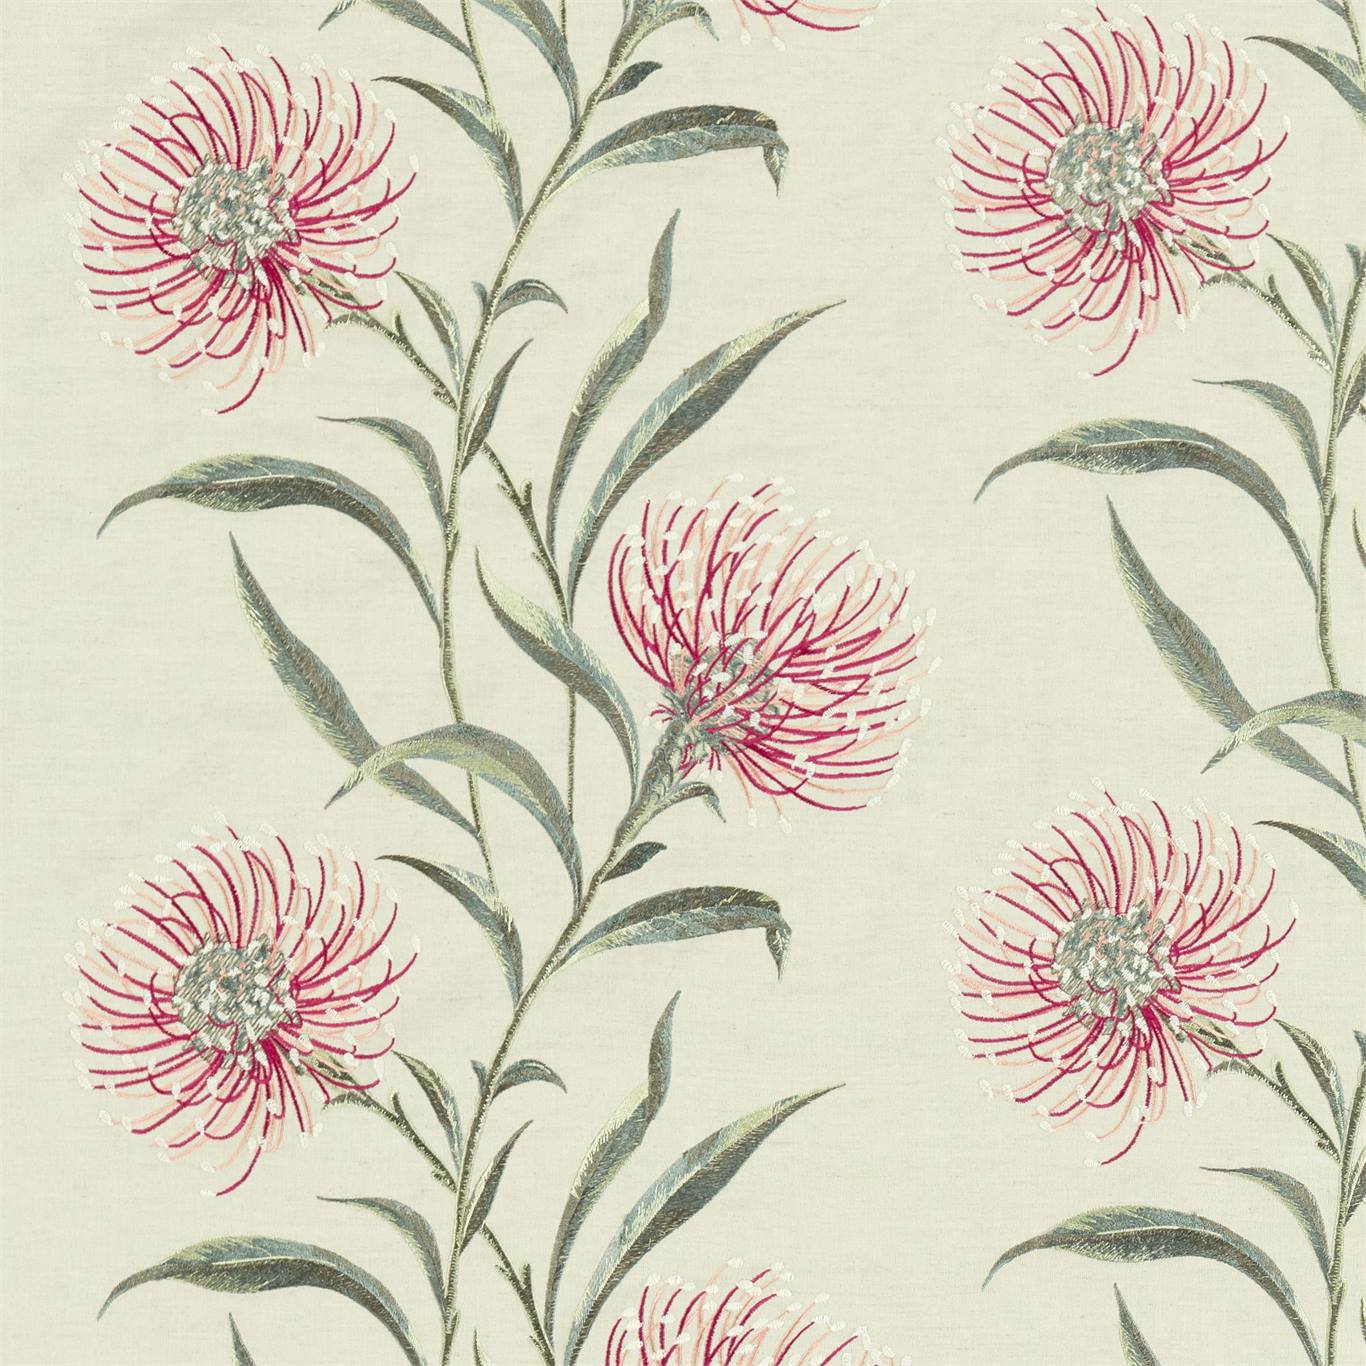 Catherinae Embroidery Fabric by Sanderson - DNTF237187 - Fuchsia